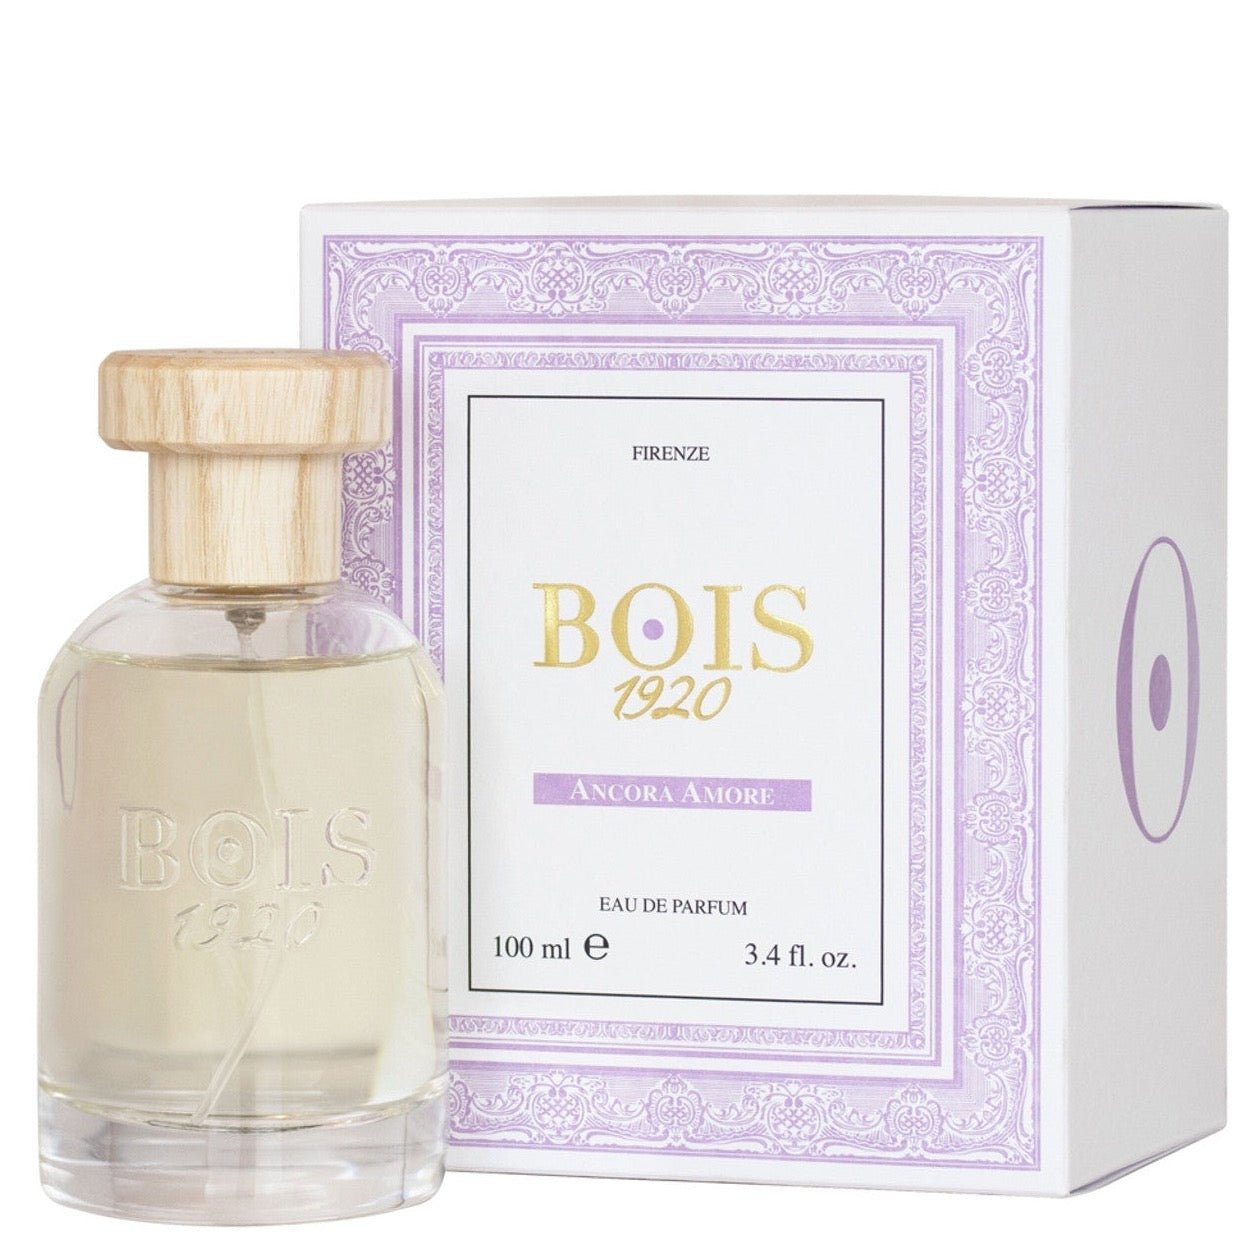 Bois 1920 Ancora Amore EDP | My Perfume Shop Australia